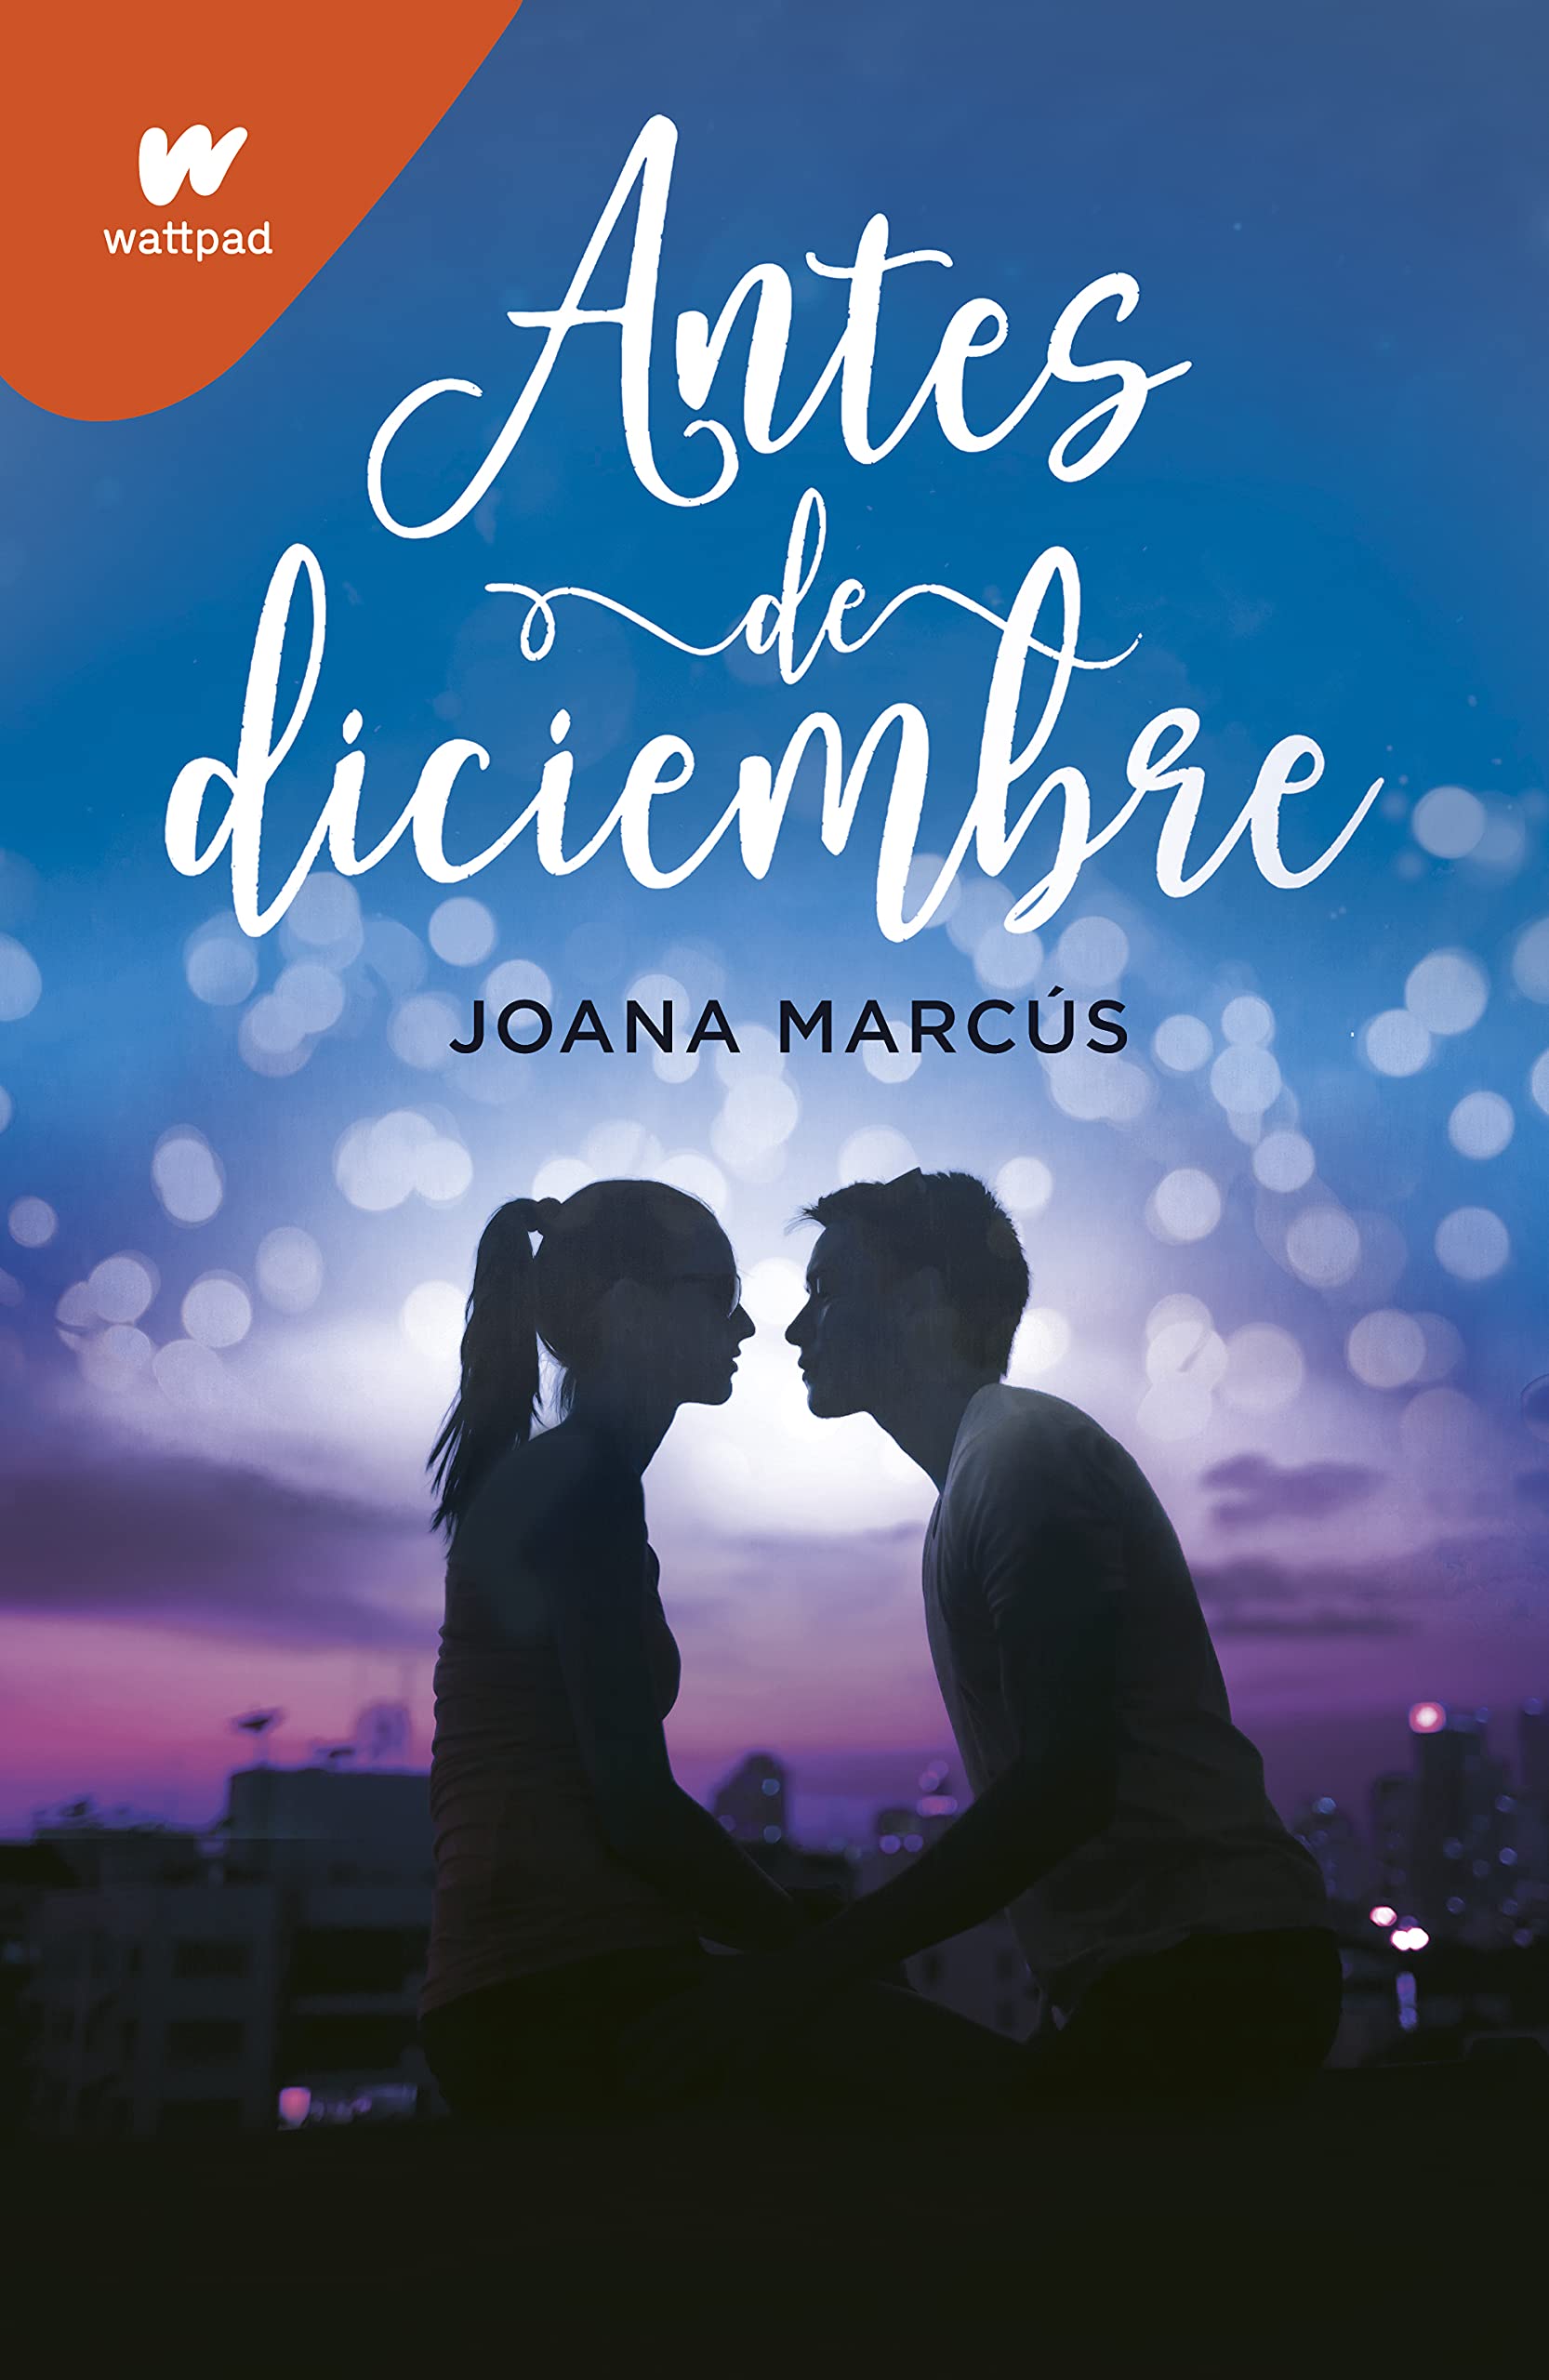 [EPUB] Meses a tu lado #1 Antes de diciembre by Joana Marcús